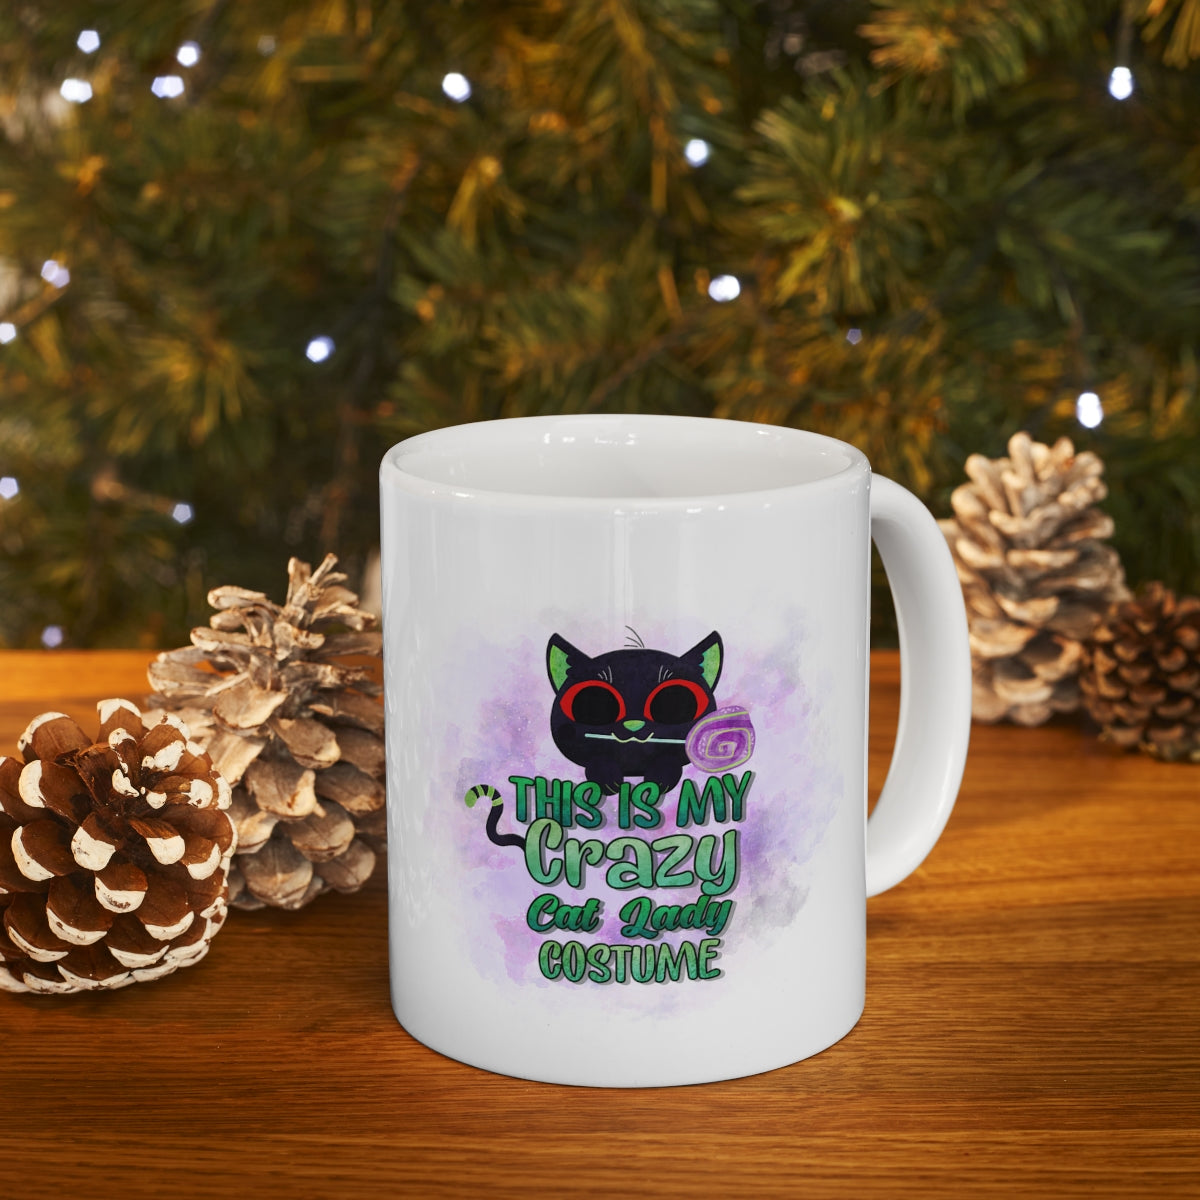 This is My Crazy Cat Lady - POD - Ceramic Mug 11oz